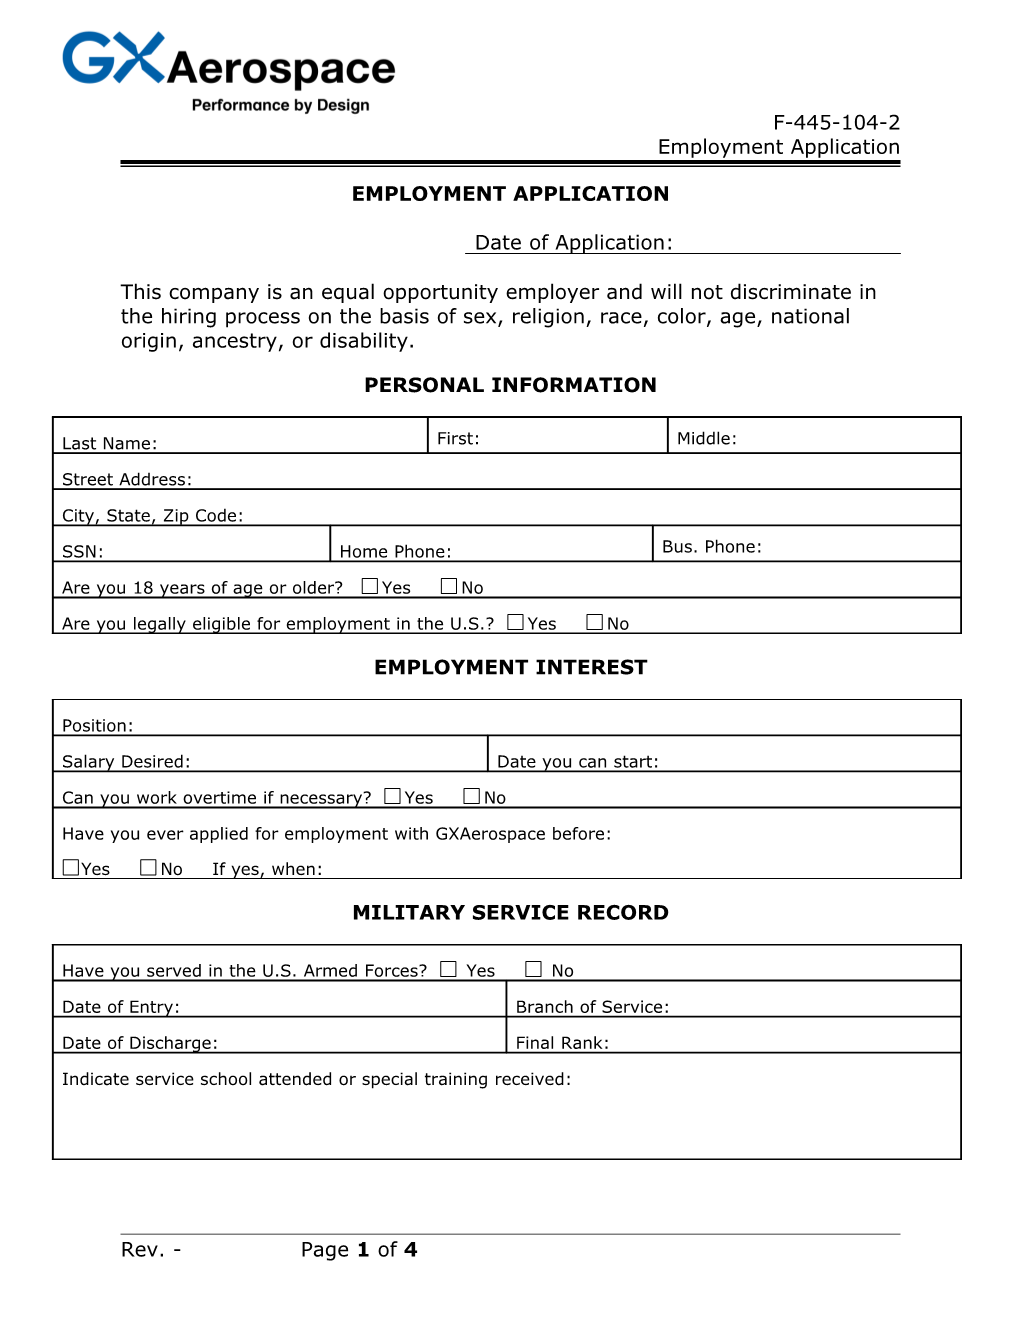 Employment Application s17